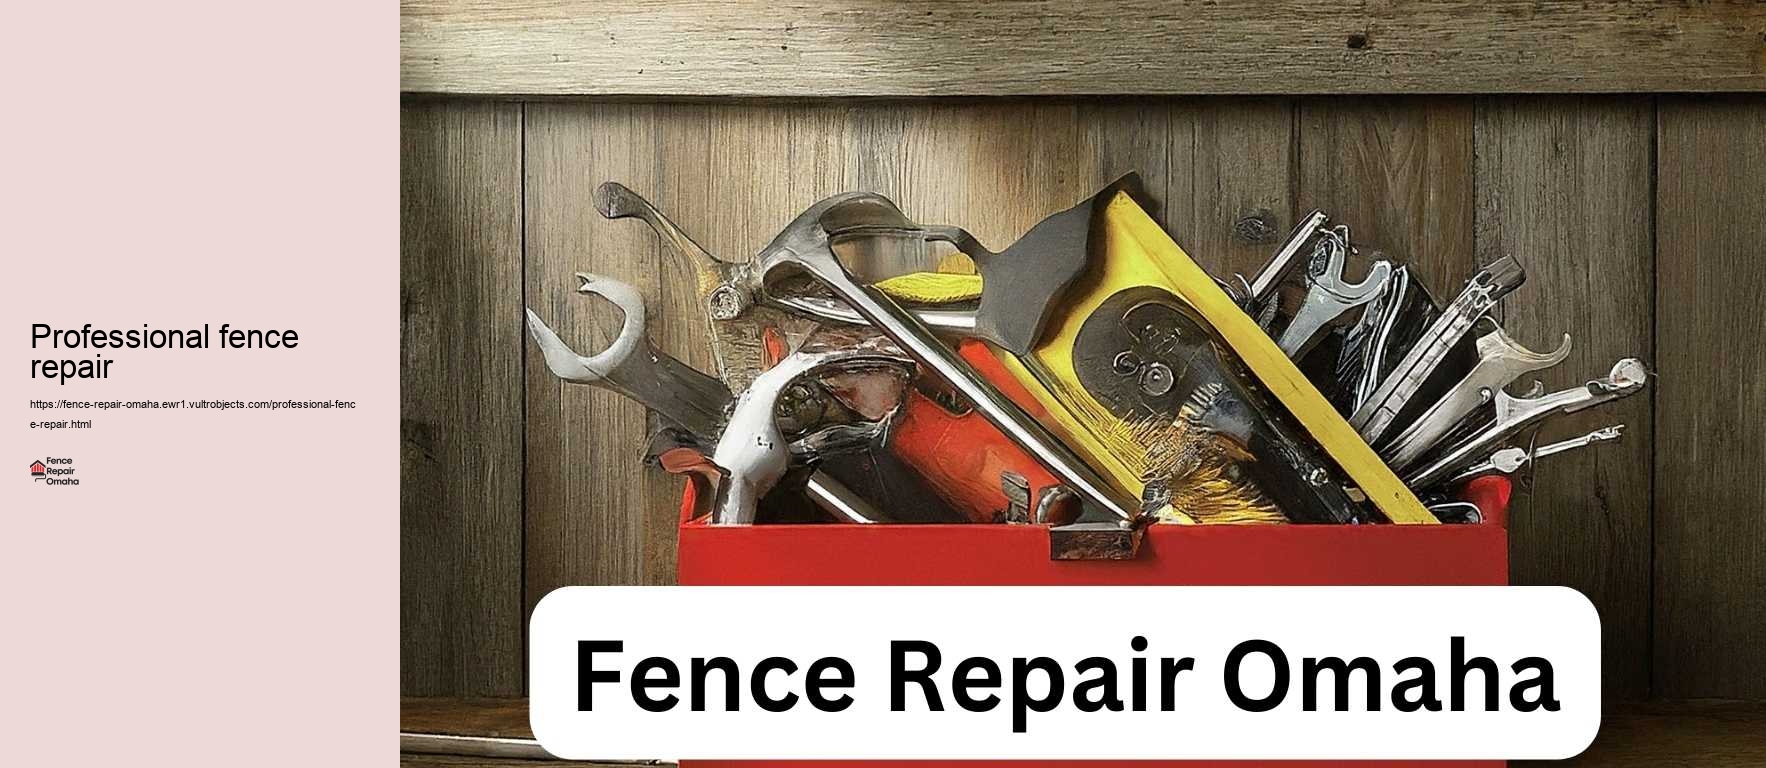 Professional fence repair